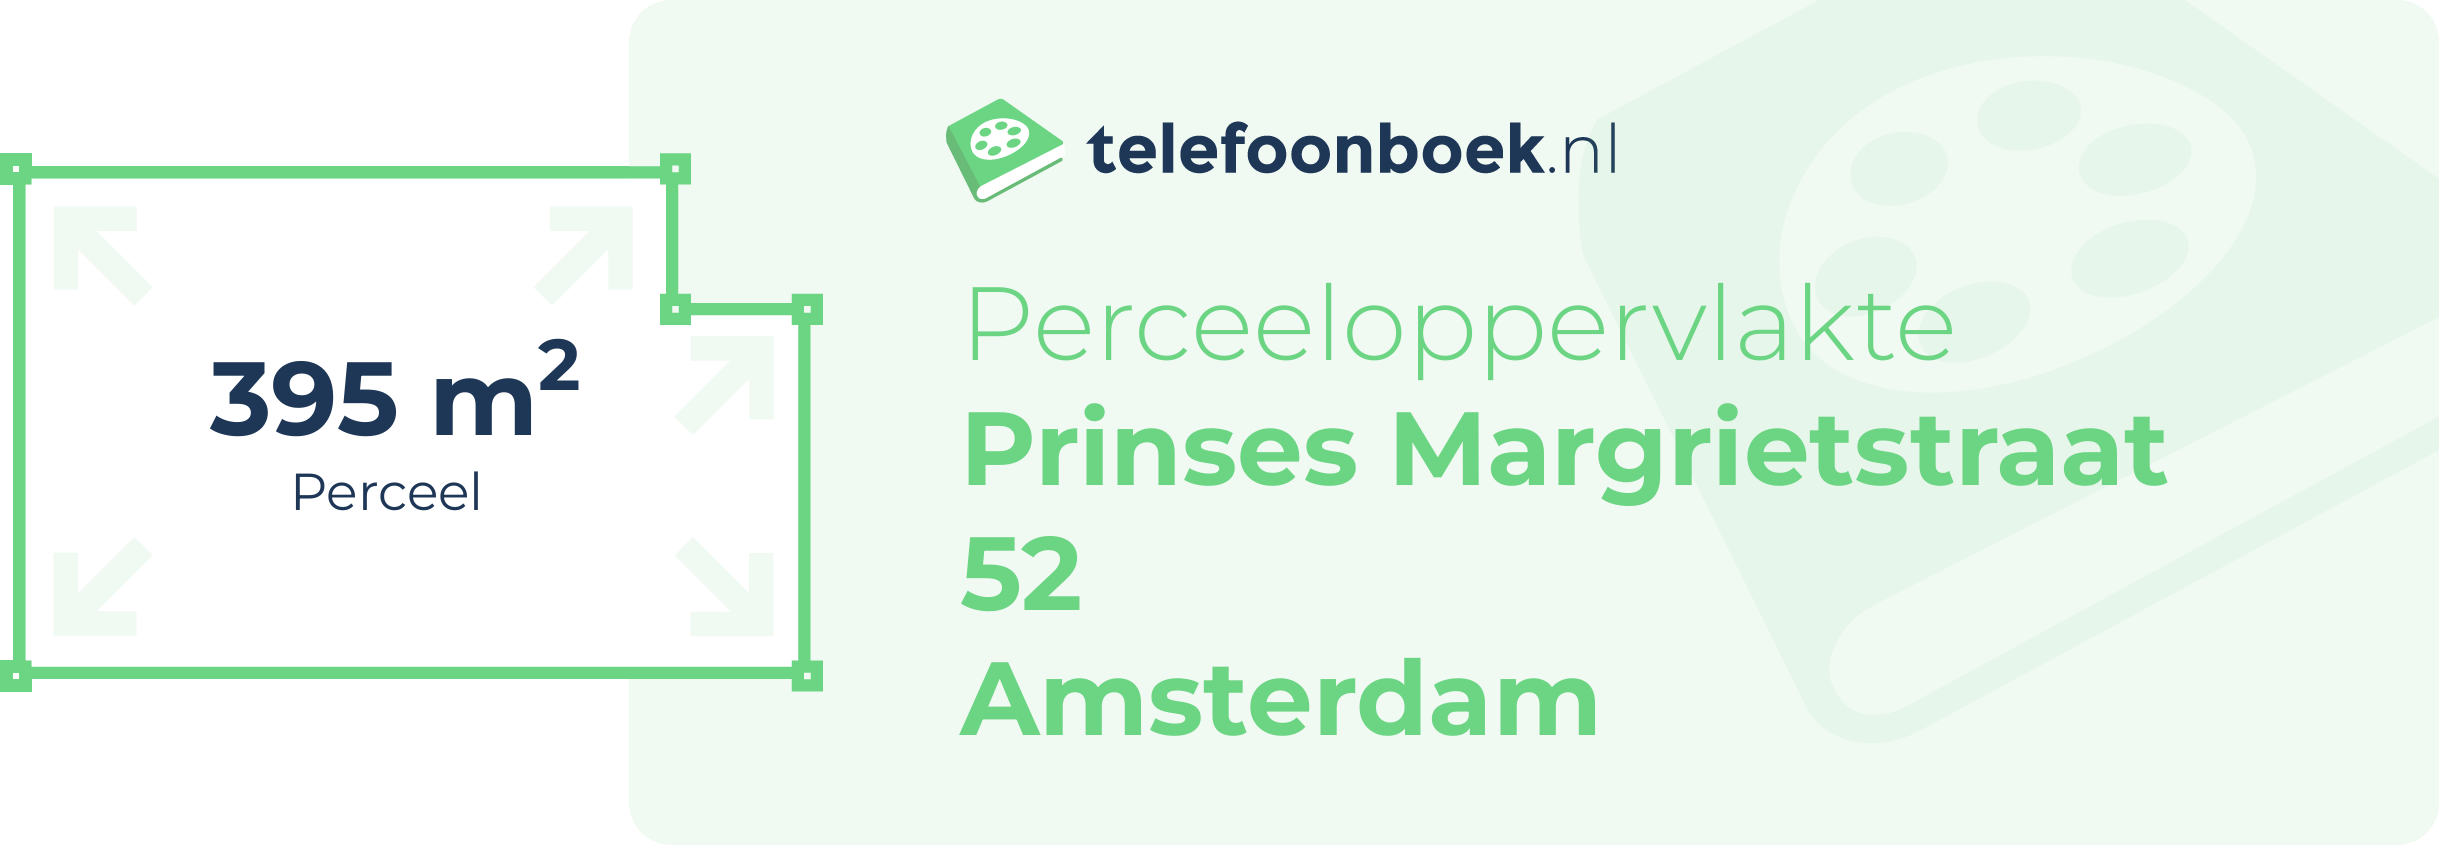 Perceeloppervlakte Prinses Margrietstraat 52 Amsterdam